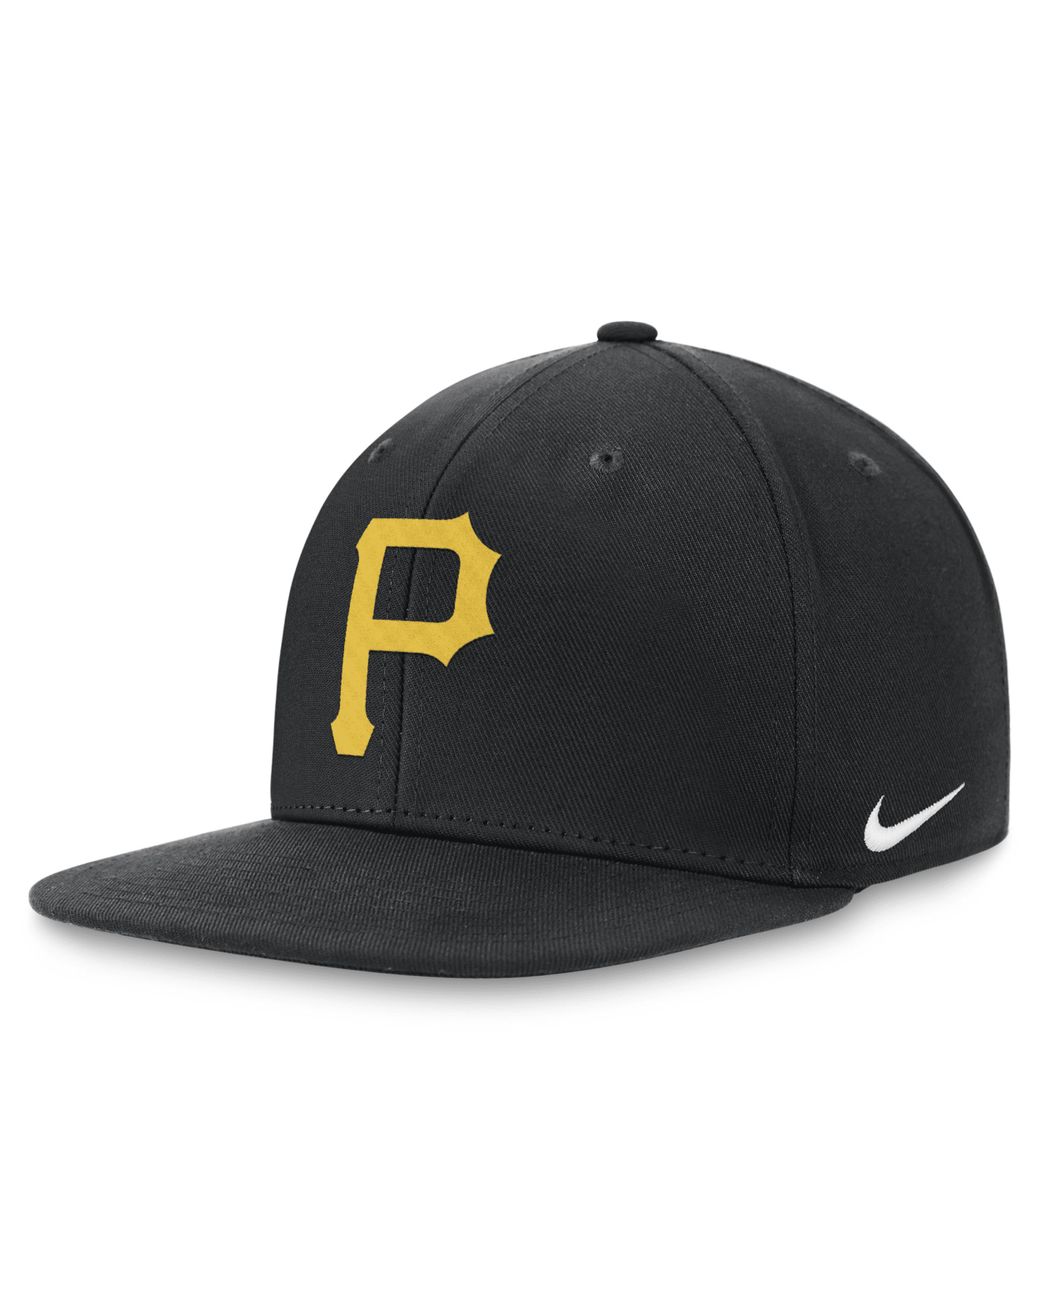 New Era, Accessories, Vintage New Era Pittsburgh Pirates Gray Black And  Yellow Mlb Baseball Hat